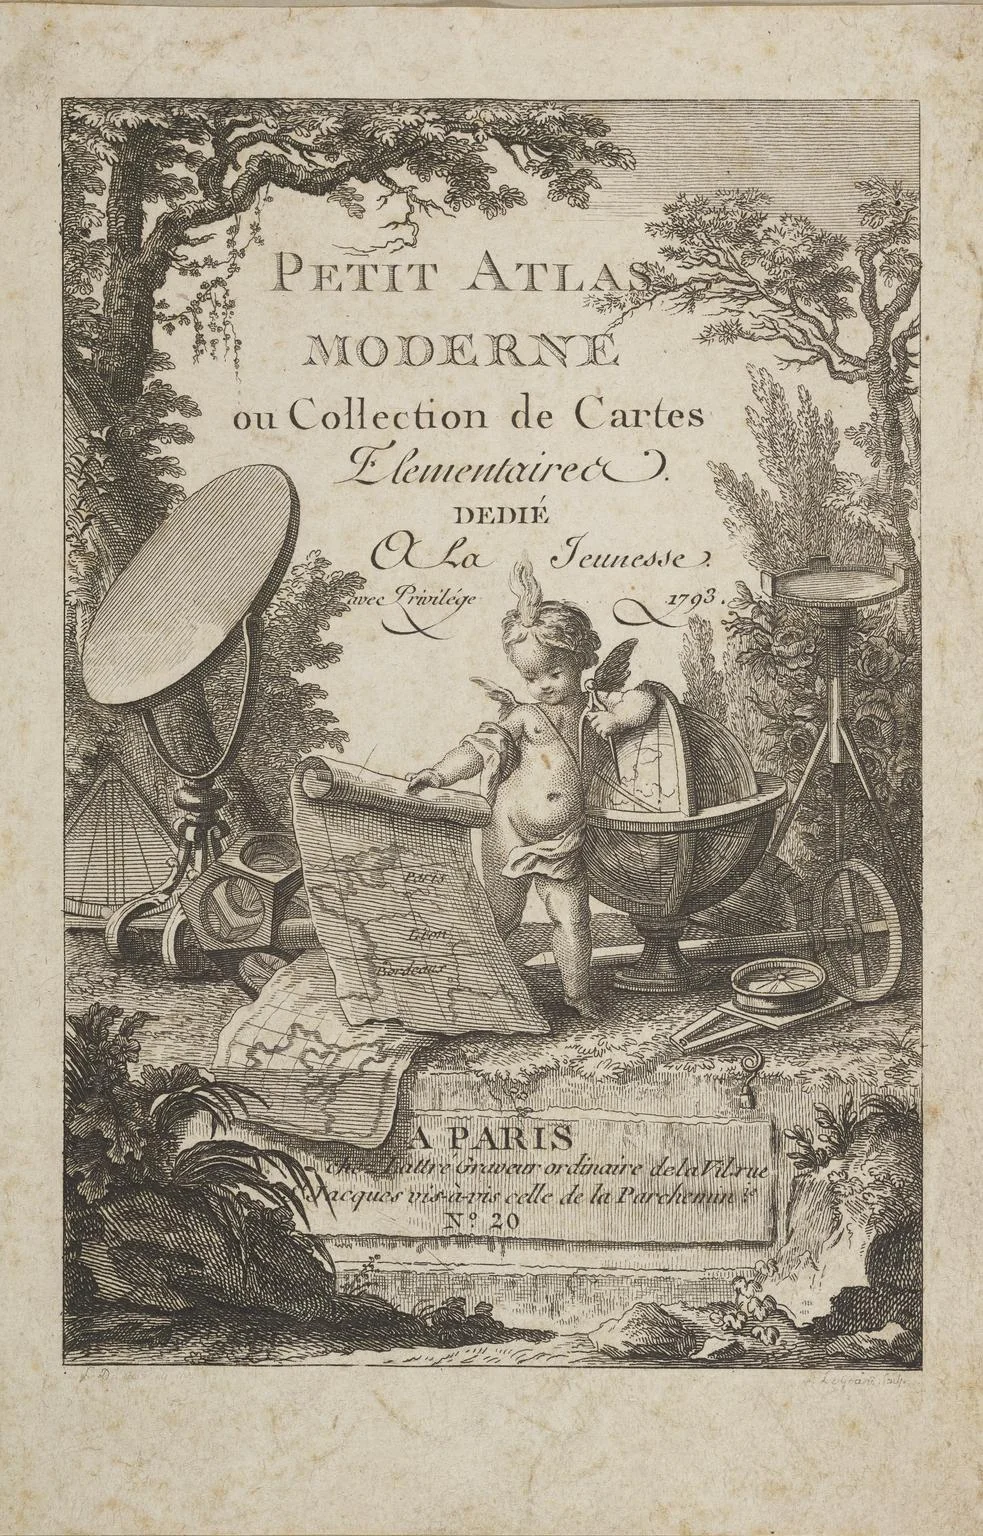 Обложка атласа «Petit atlas moderne»/Getty images